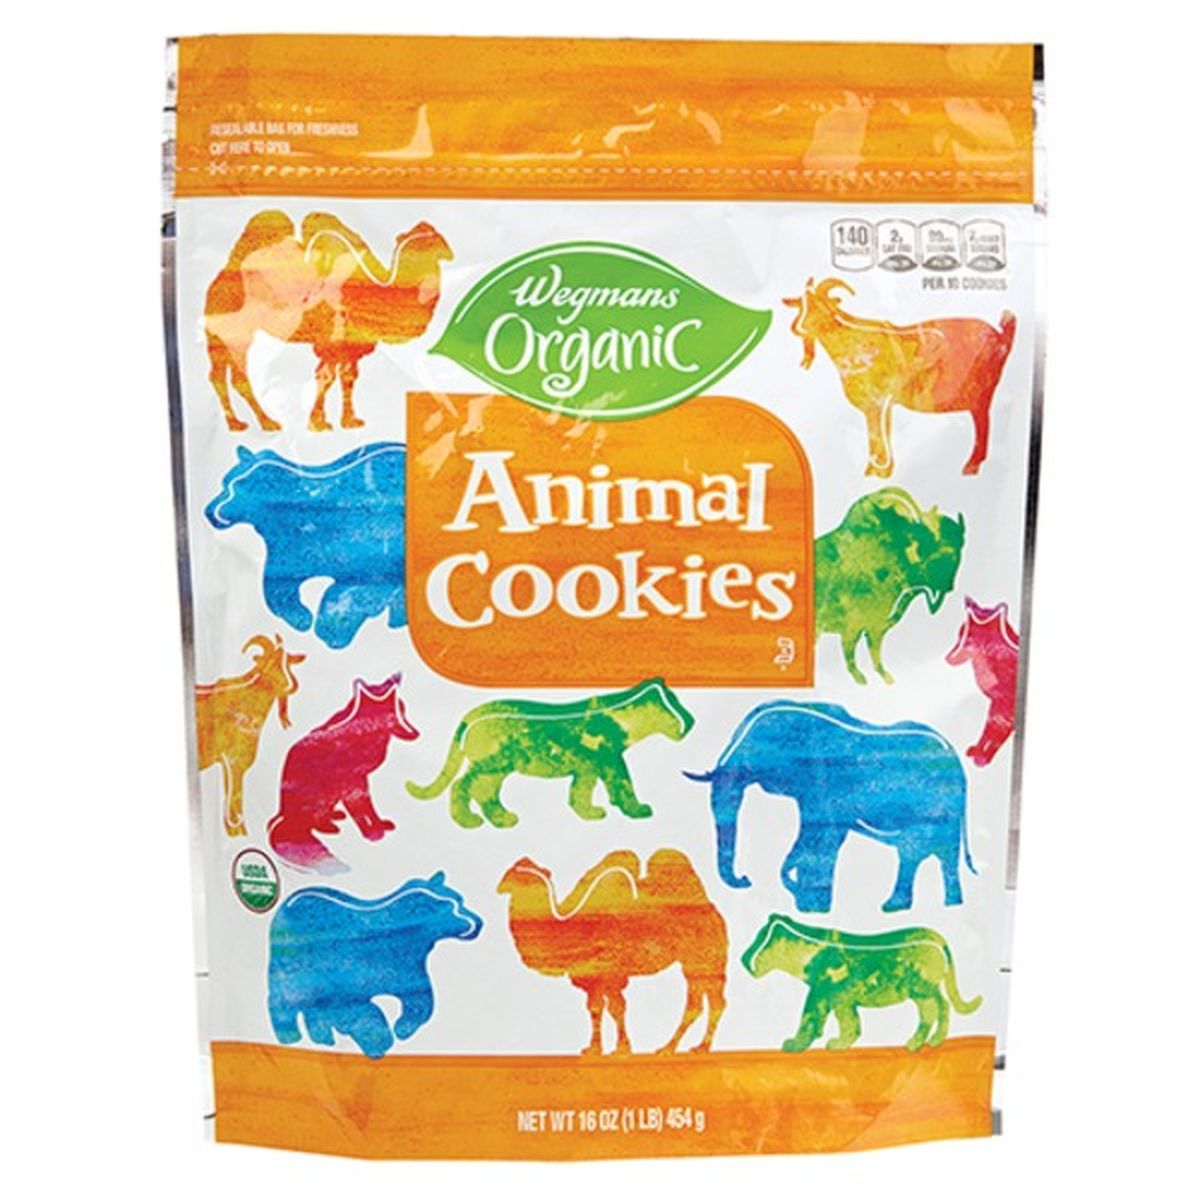 Calories in Wegmans Organic Animal Cookies